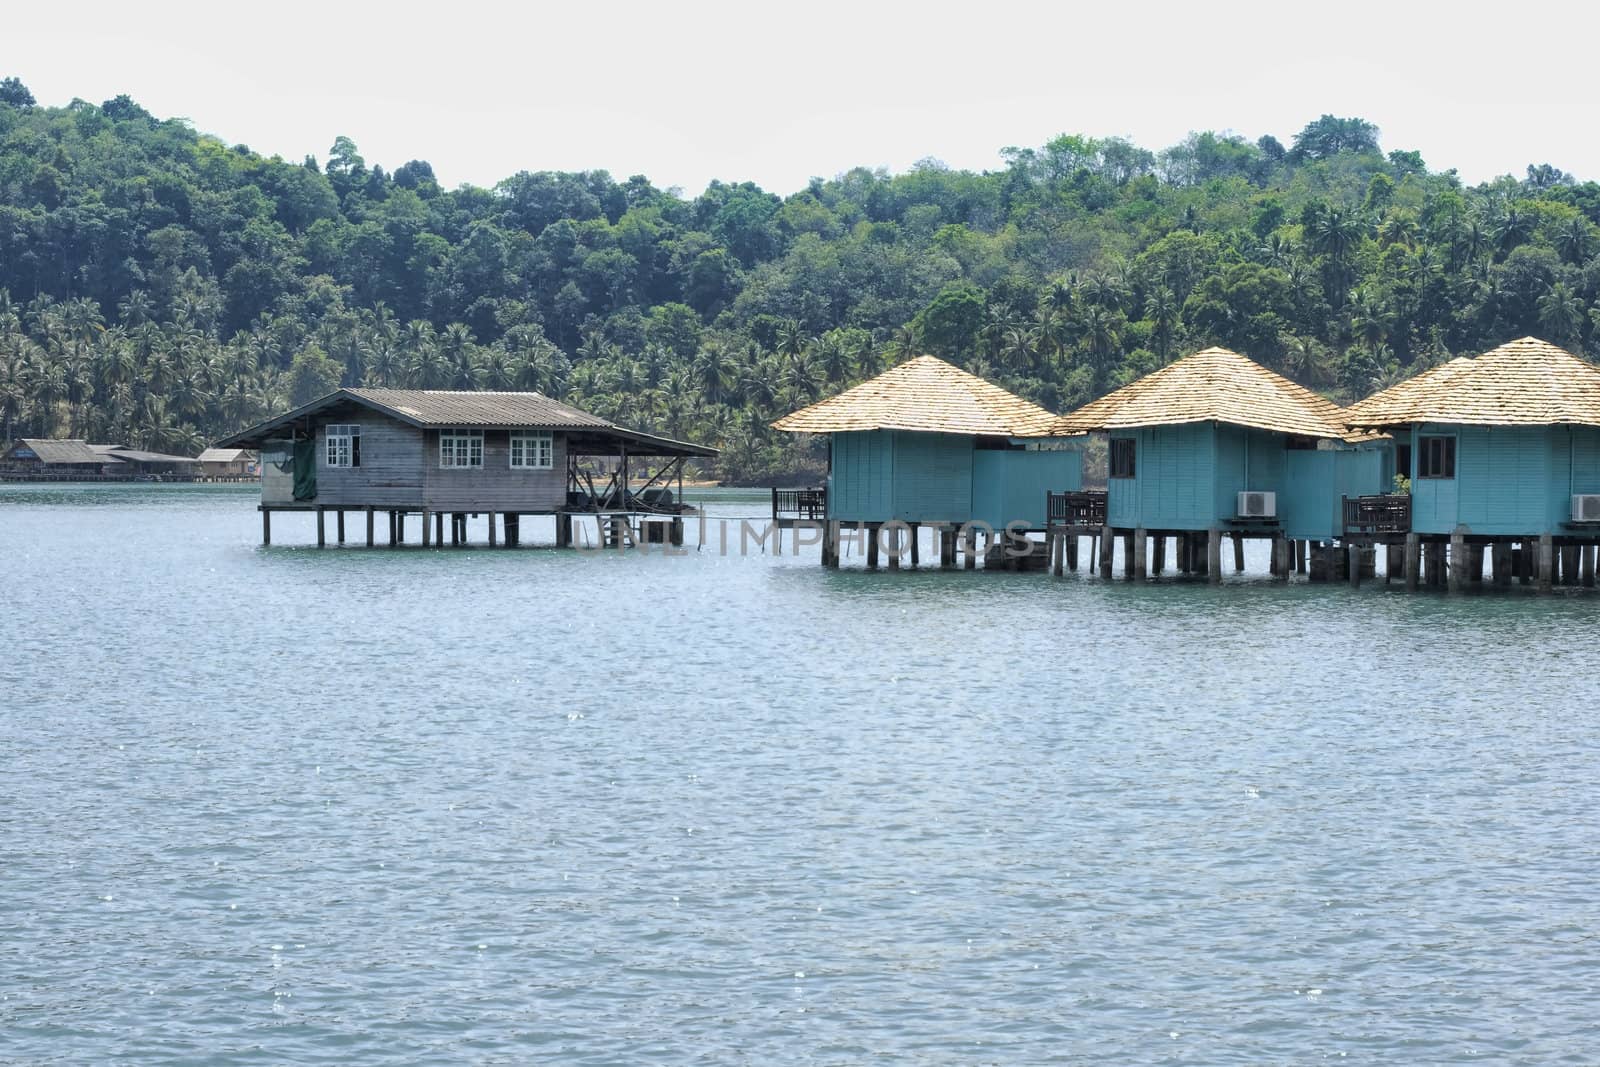 Blue huts in water off island coast